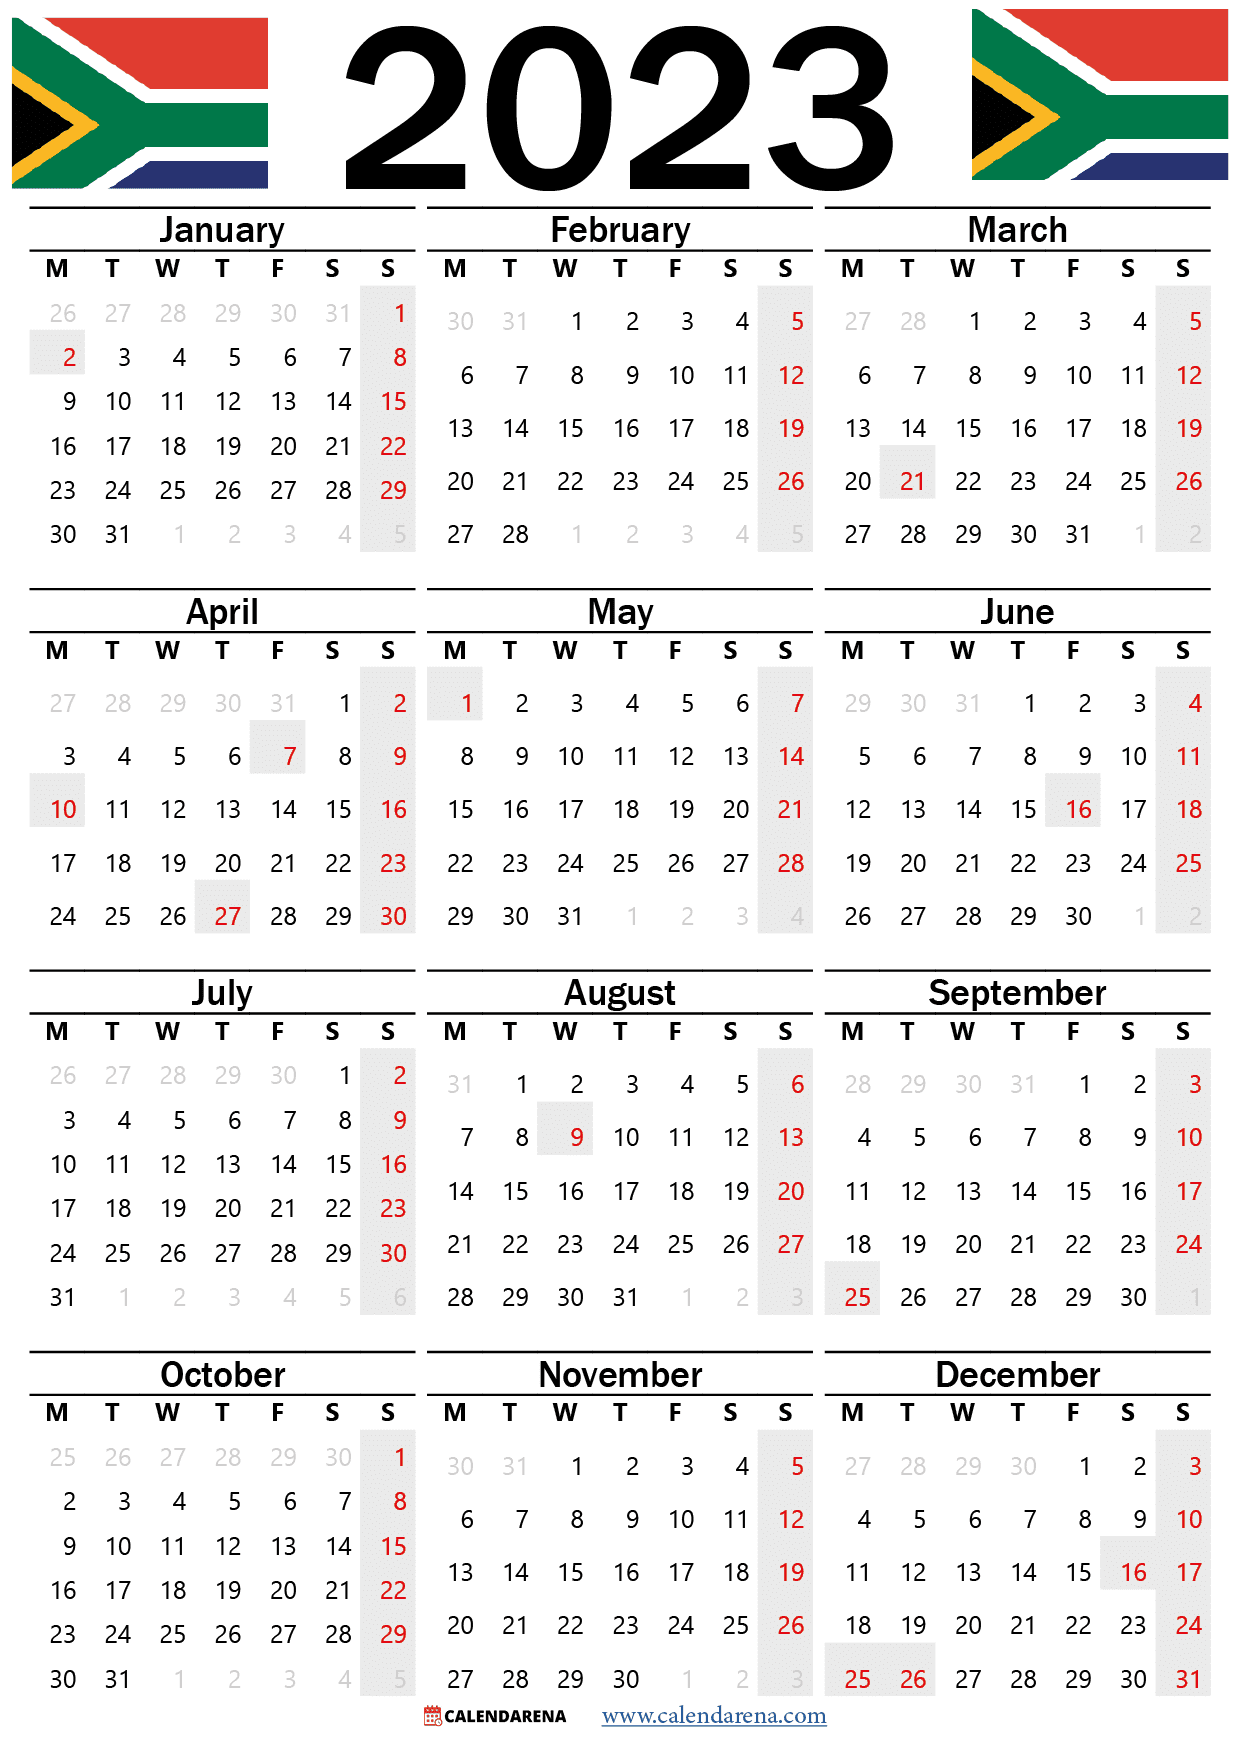 south-africa-public-holidays-2023-calendar-time-and-date-calendar-2023-canada